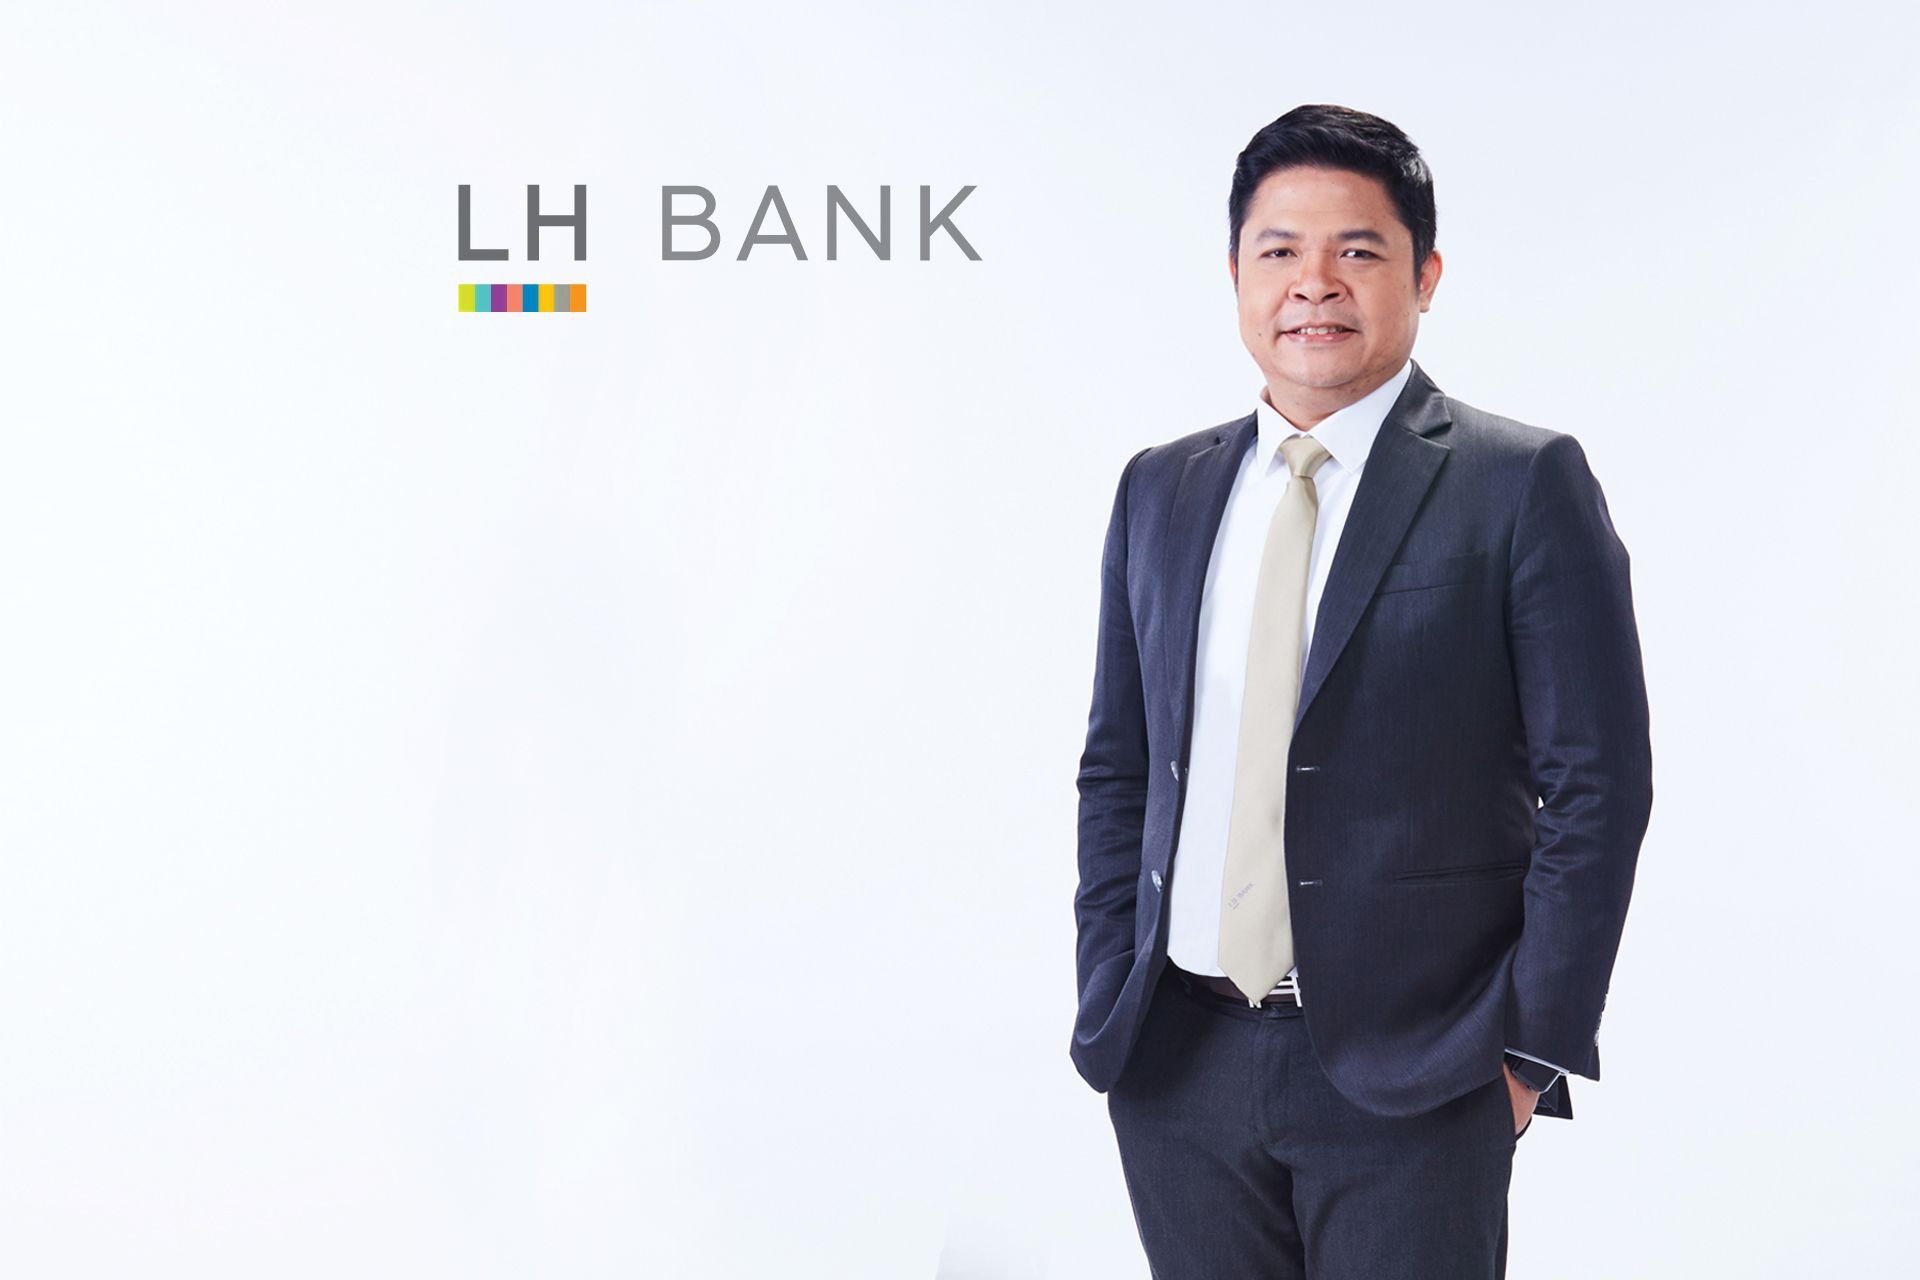 LH Bank เปิดตัวแอปพลิเคชัน Profita ตัวช่วยลูกค้าก้าวสู่มือโปรเรื่ องลงทุน ฟีเจอร์จัดเต็ม 